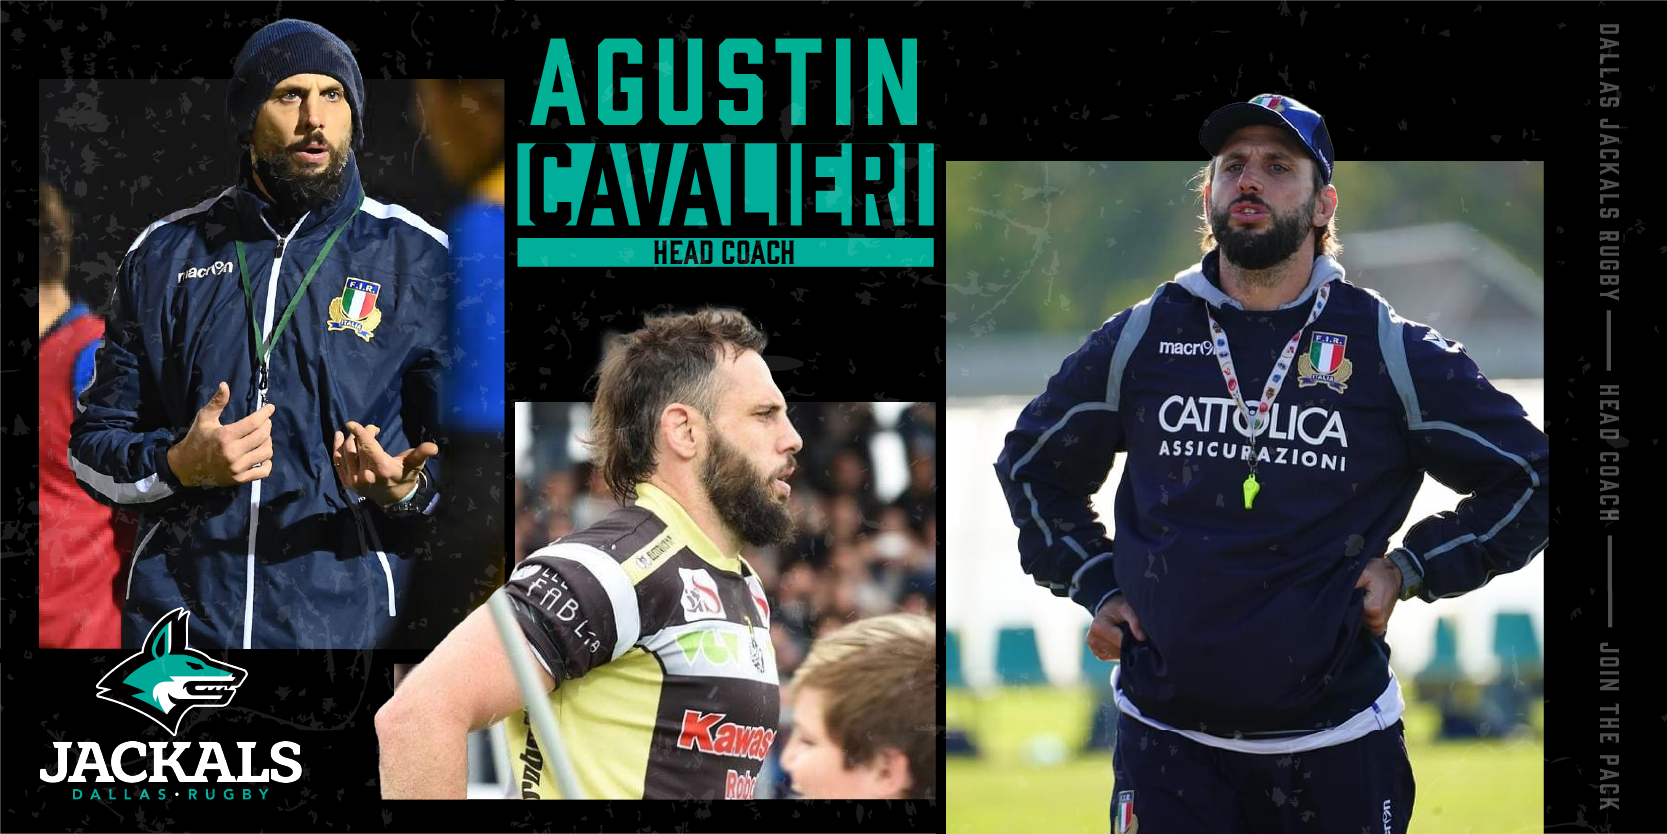 Dallas Jackals Name, Major League Rugby’s Newest Expansion Team, Name Accomplished Italian Coach Argentine Agustin Cavalieri as Head Coach